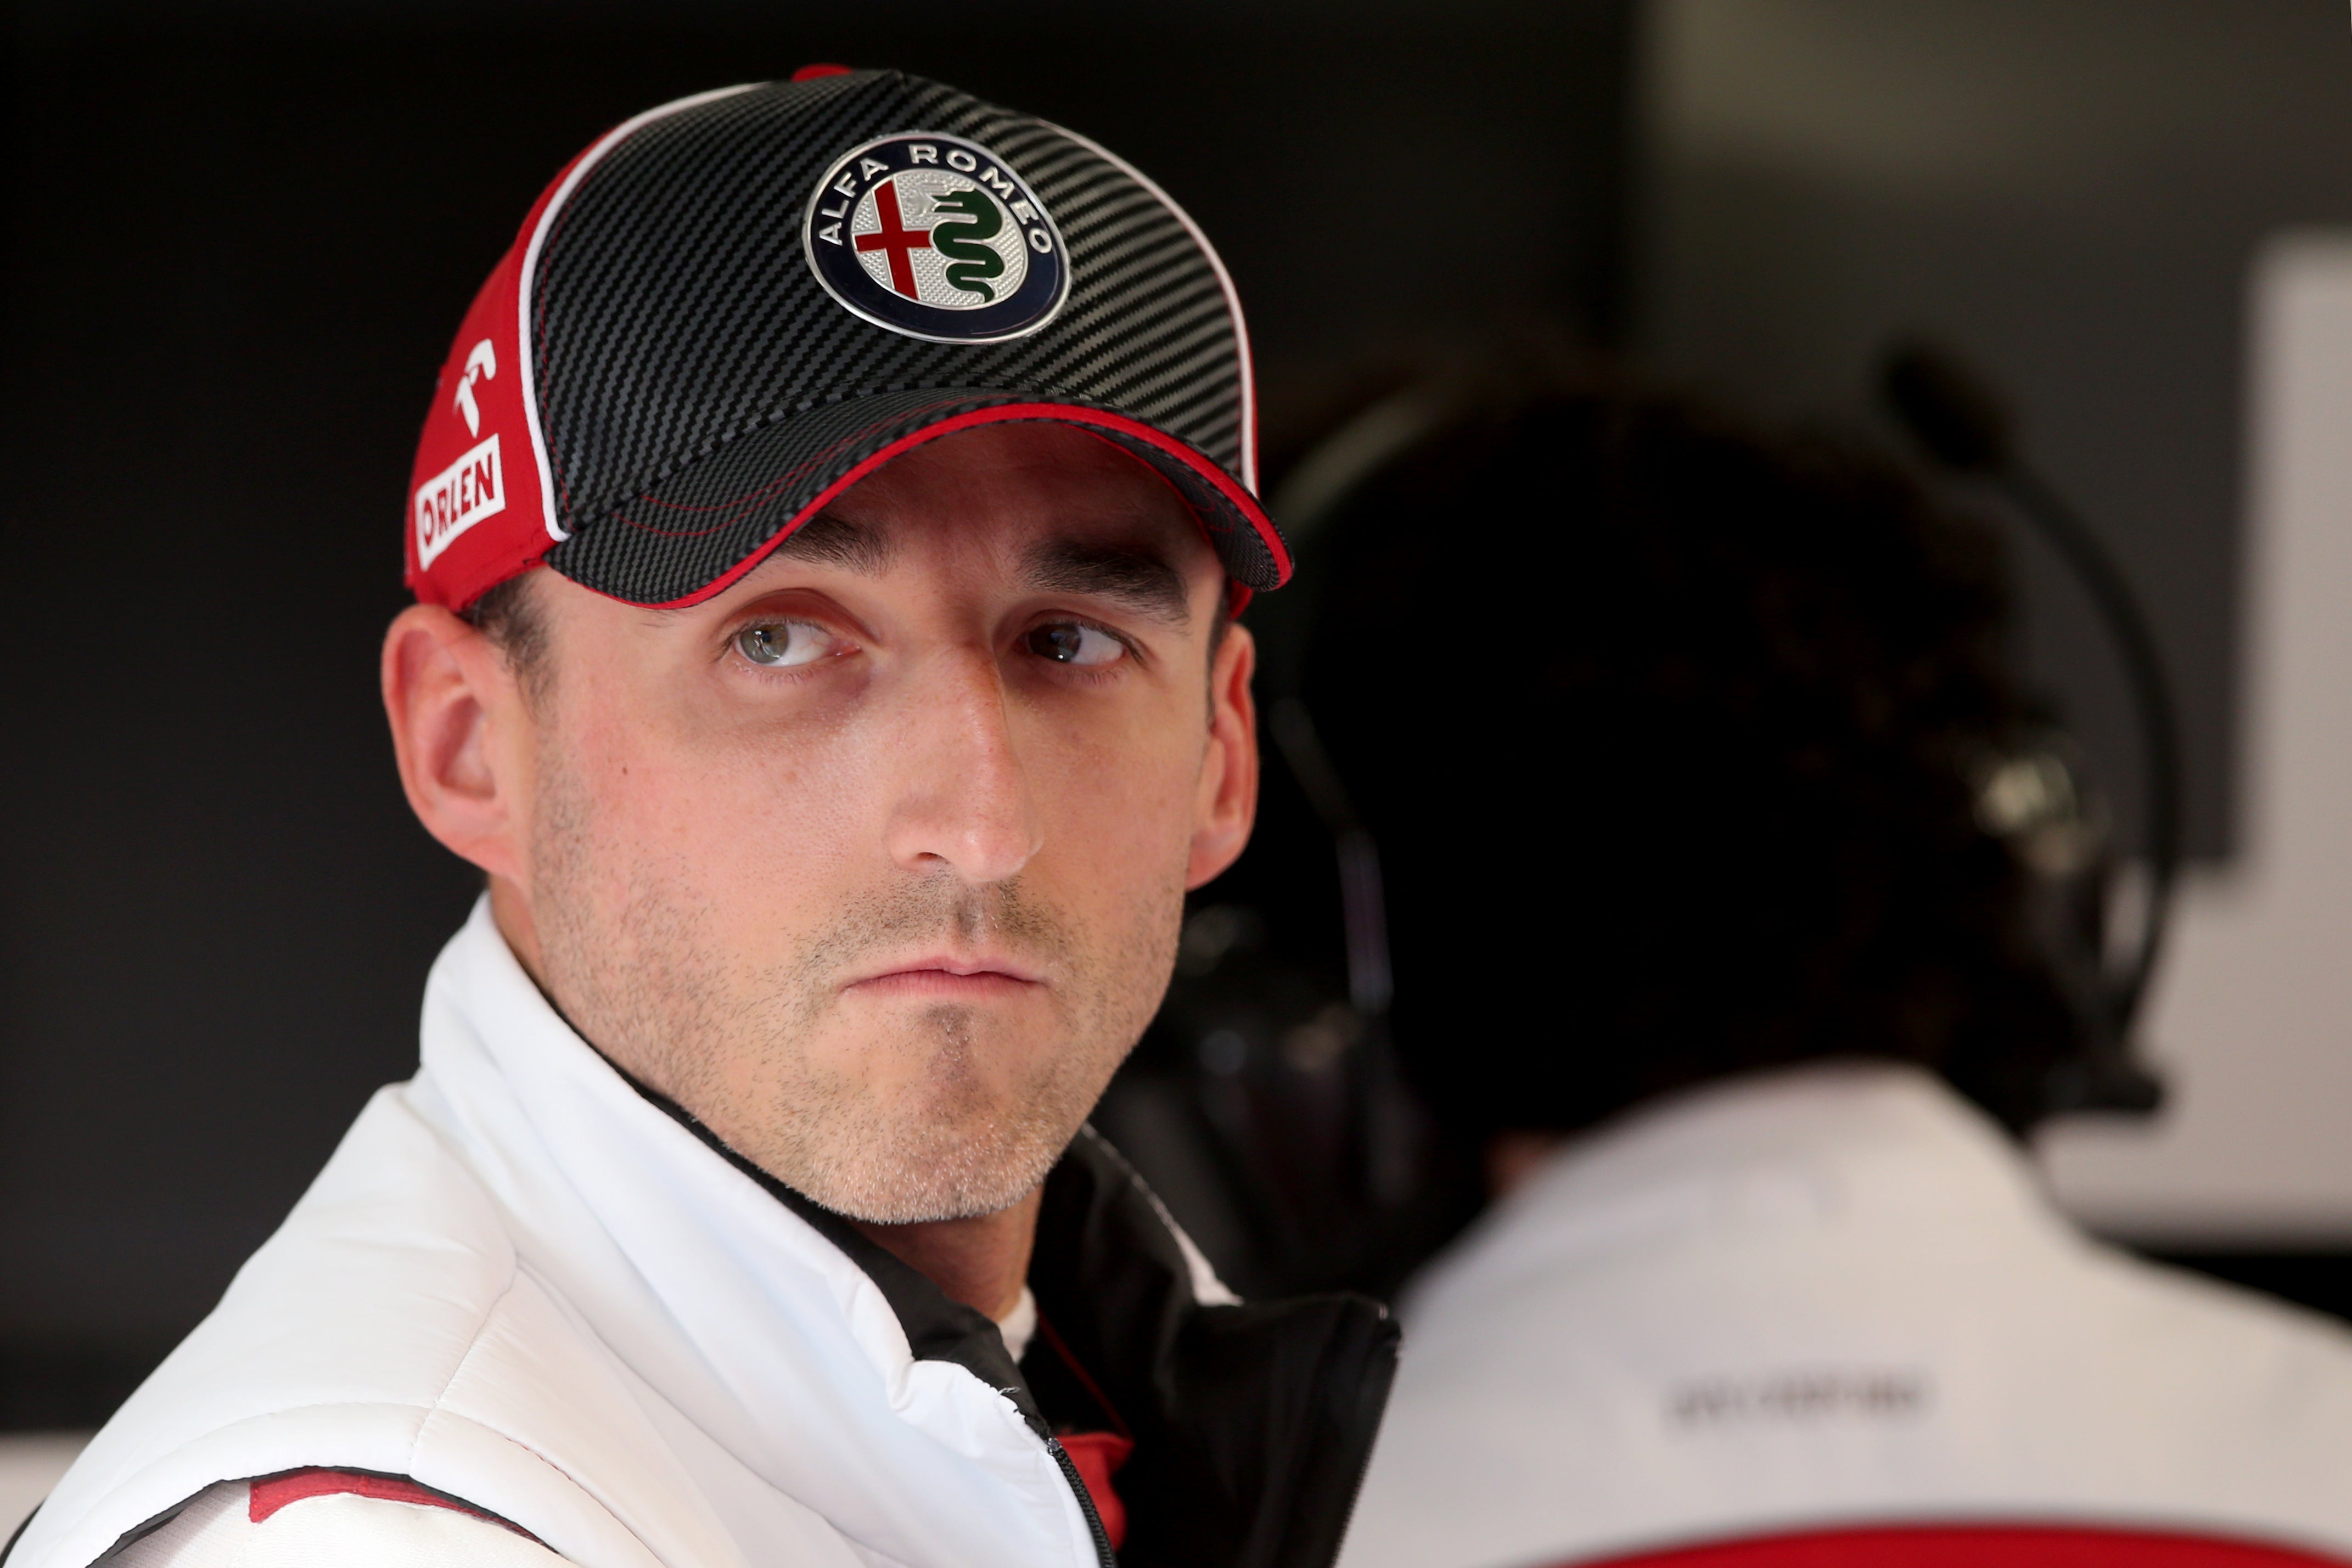 Robert Kubica drove for Alfa Romeo at Monza this season